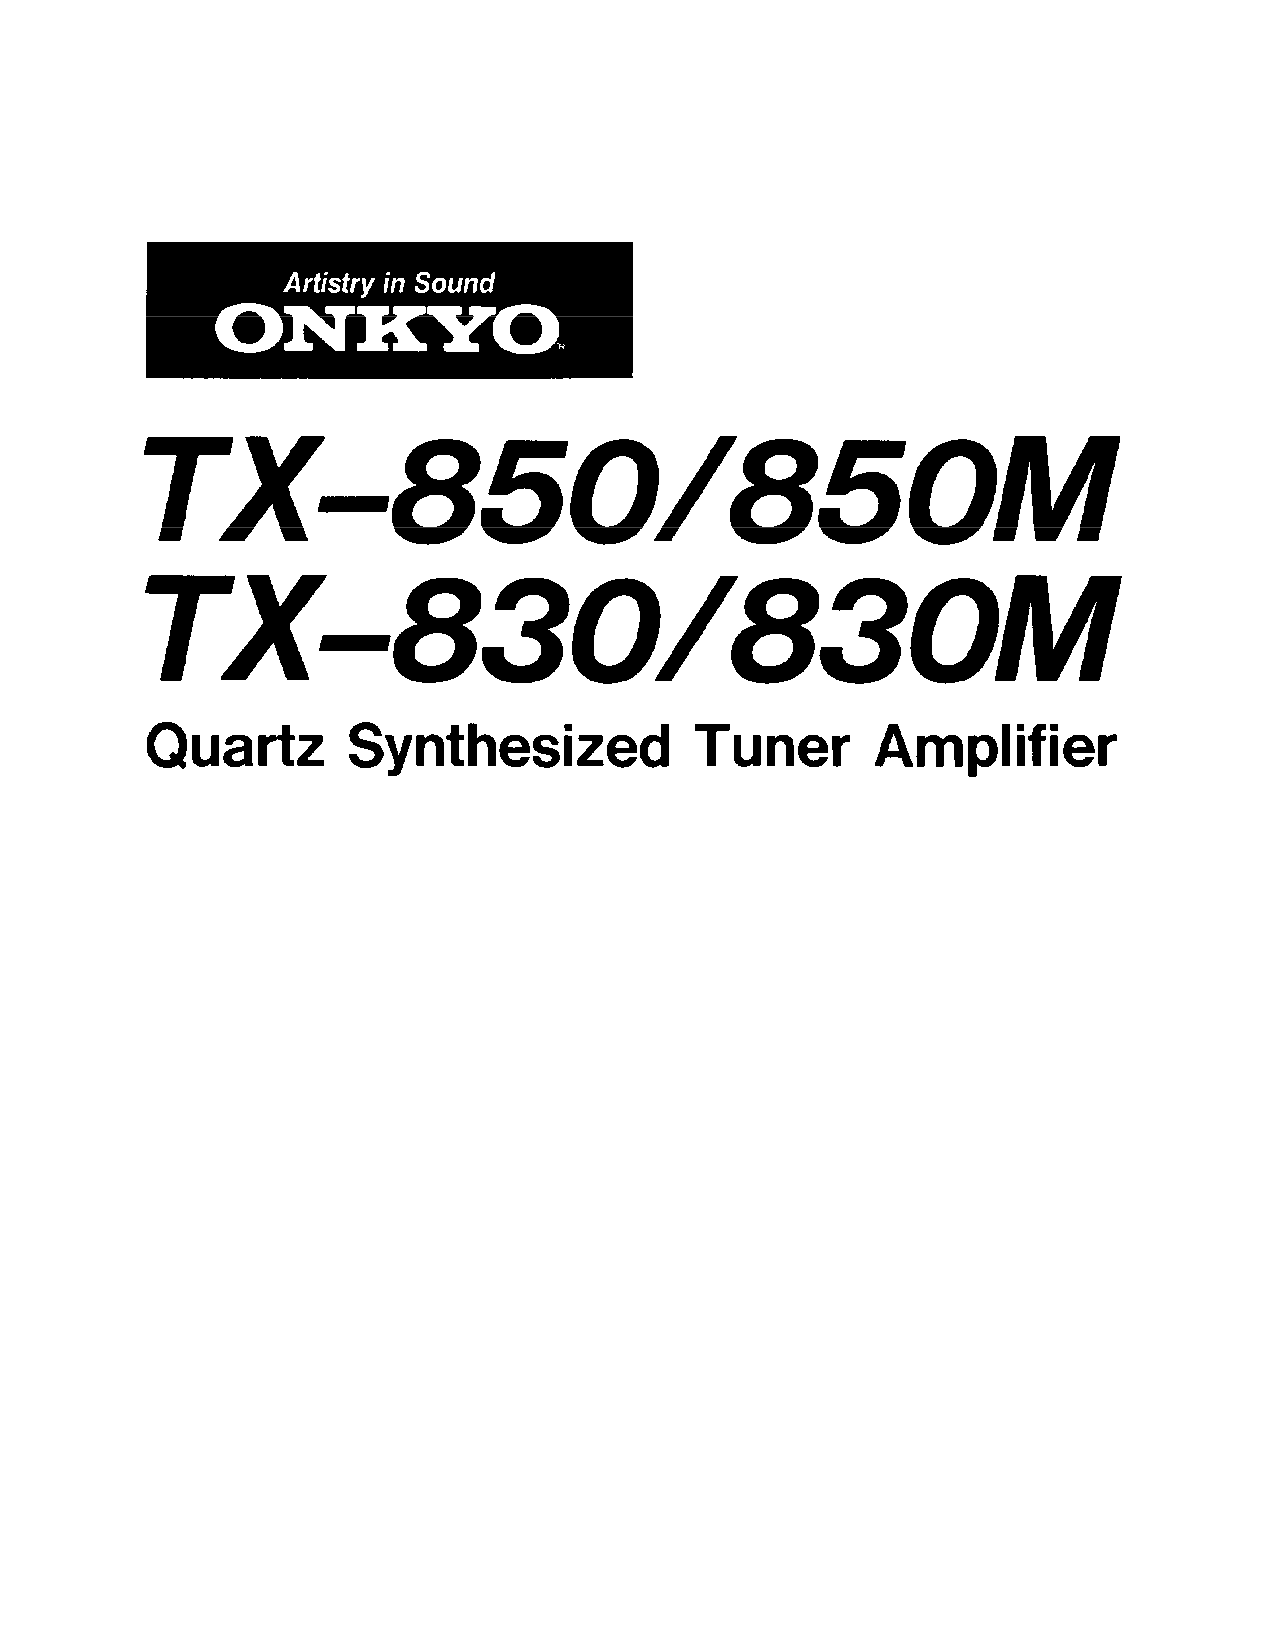 Onkyo TX-830, TX-830M, TX-850, TX-850M Instruction Manual